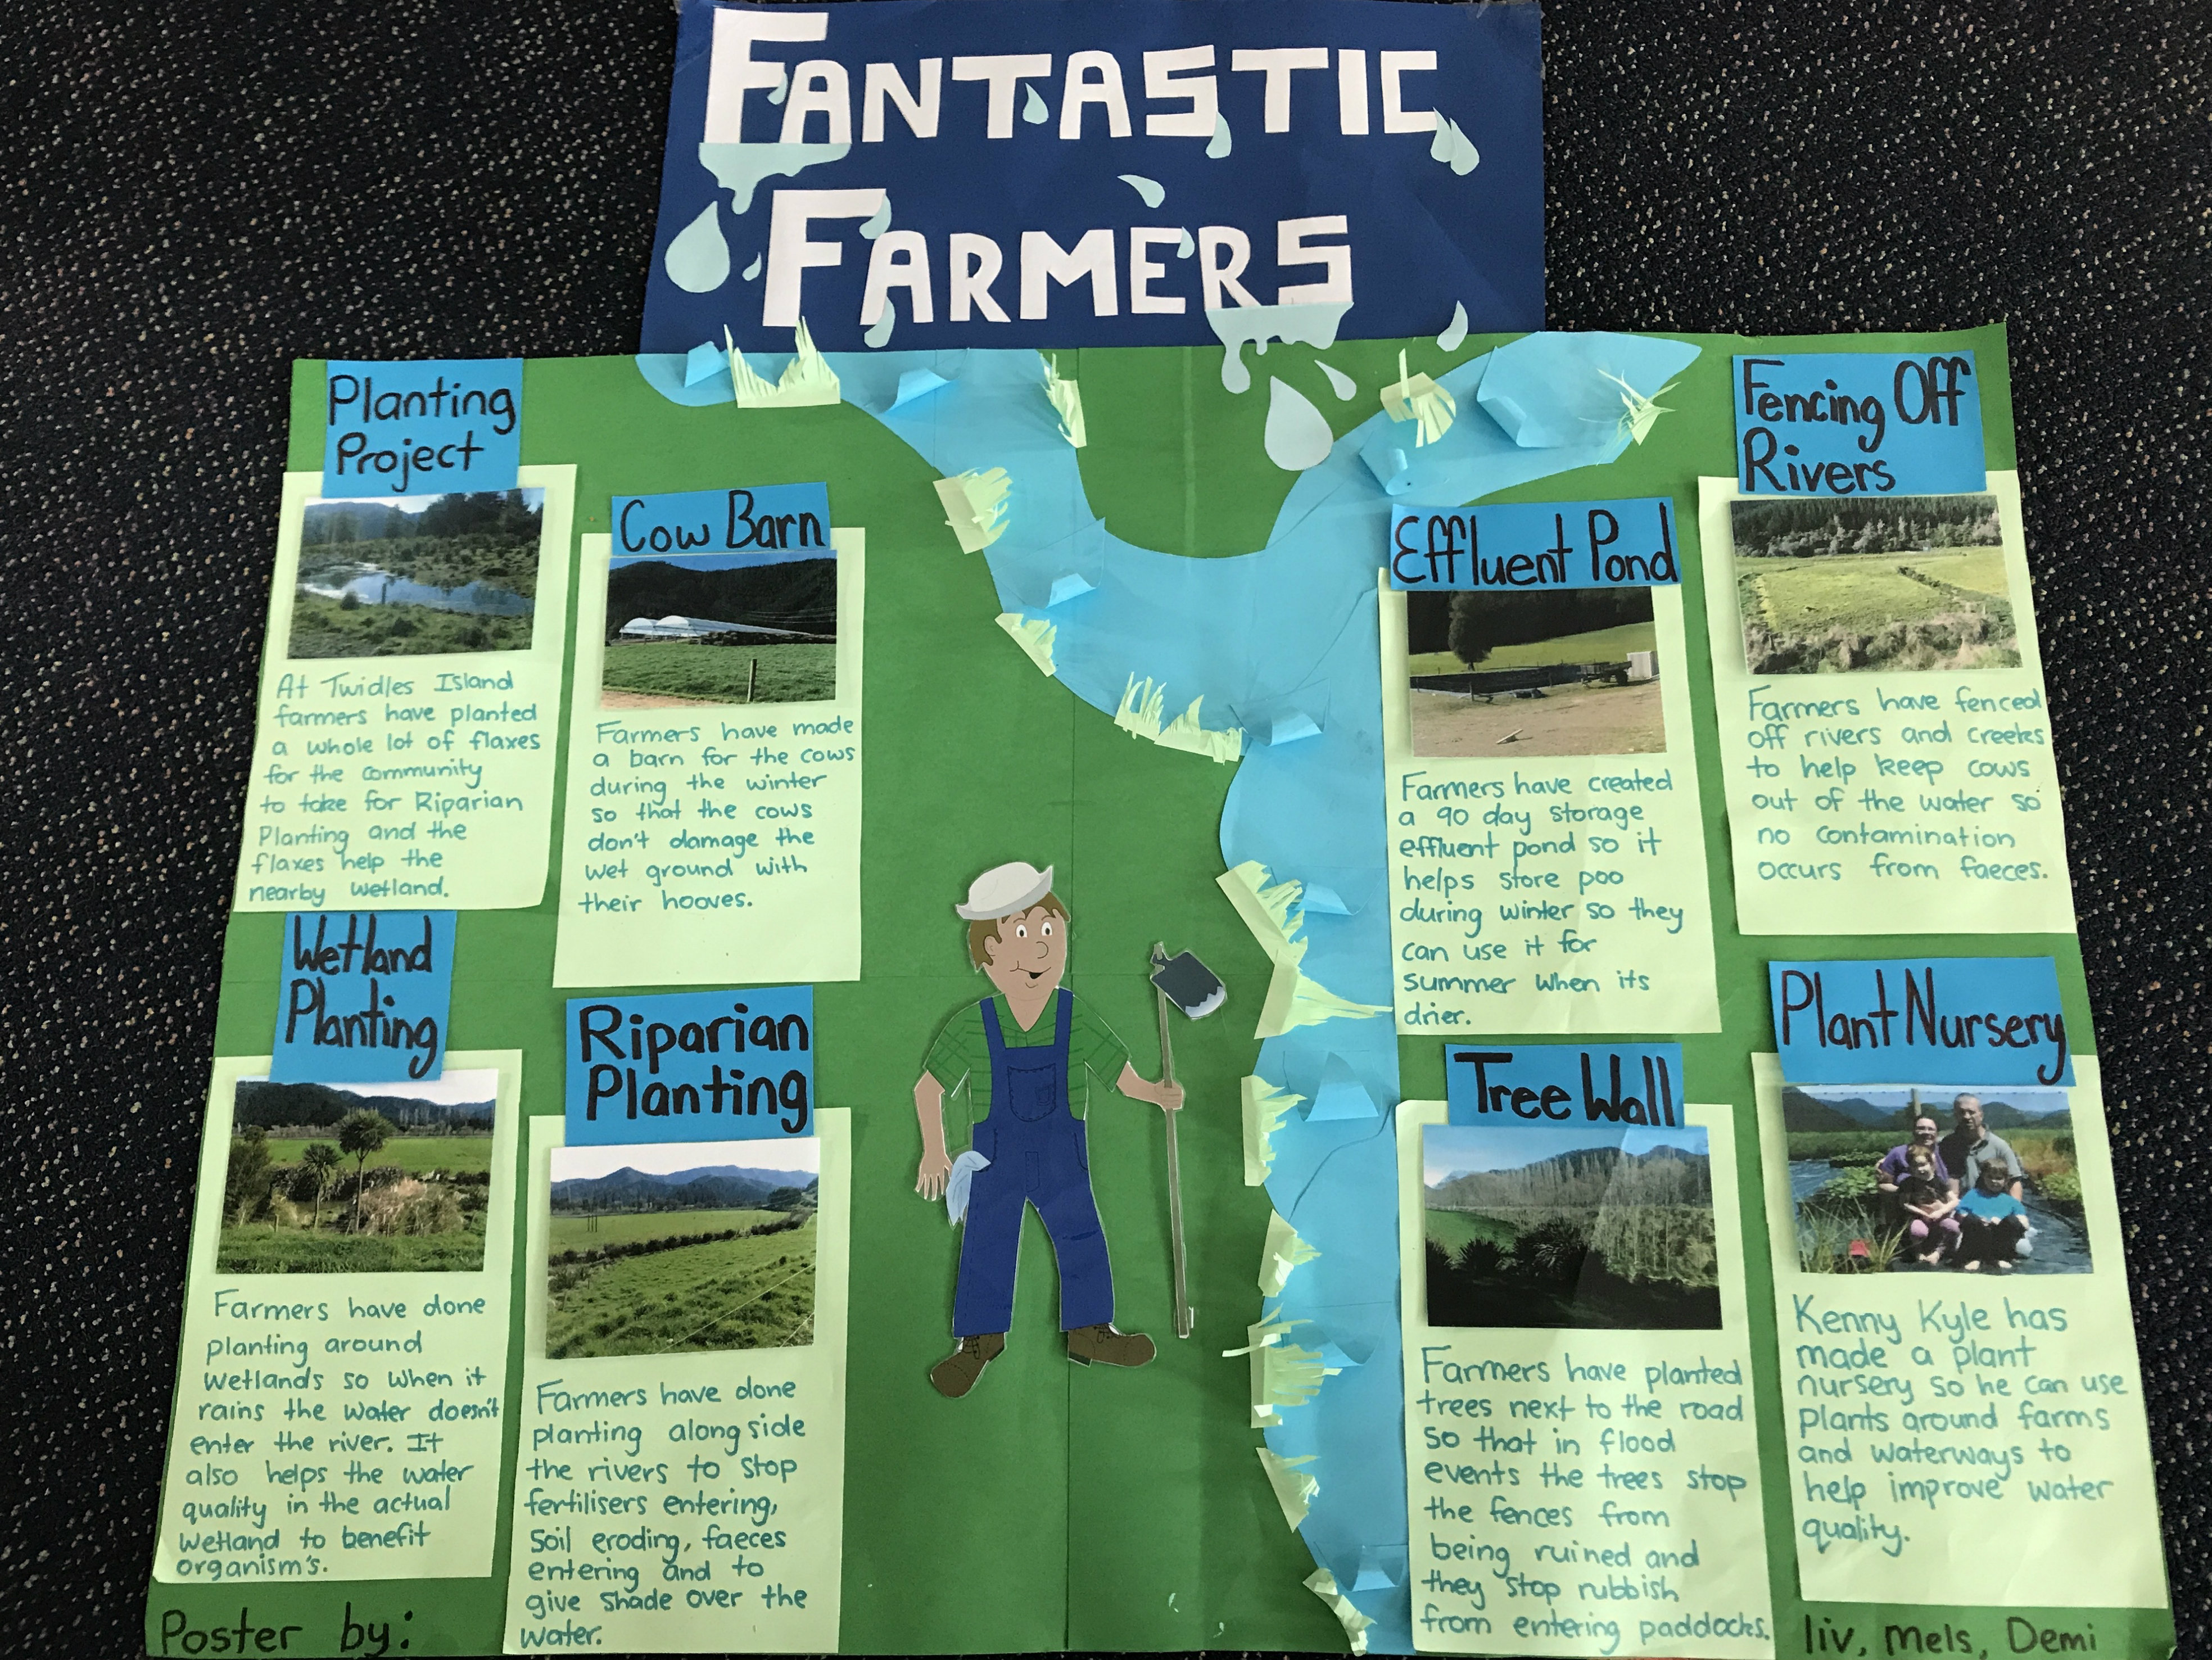 Fantastic farmers